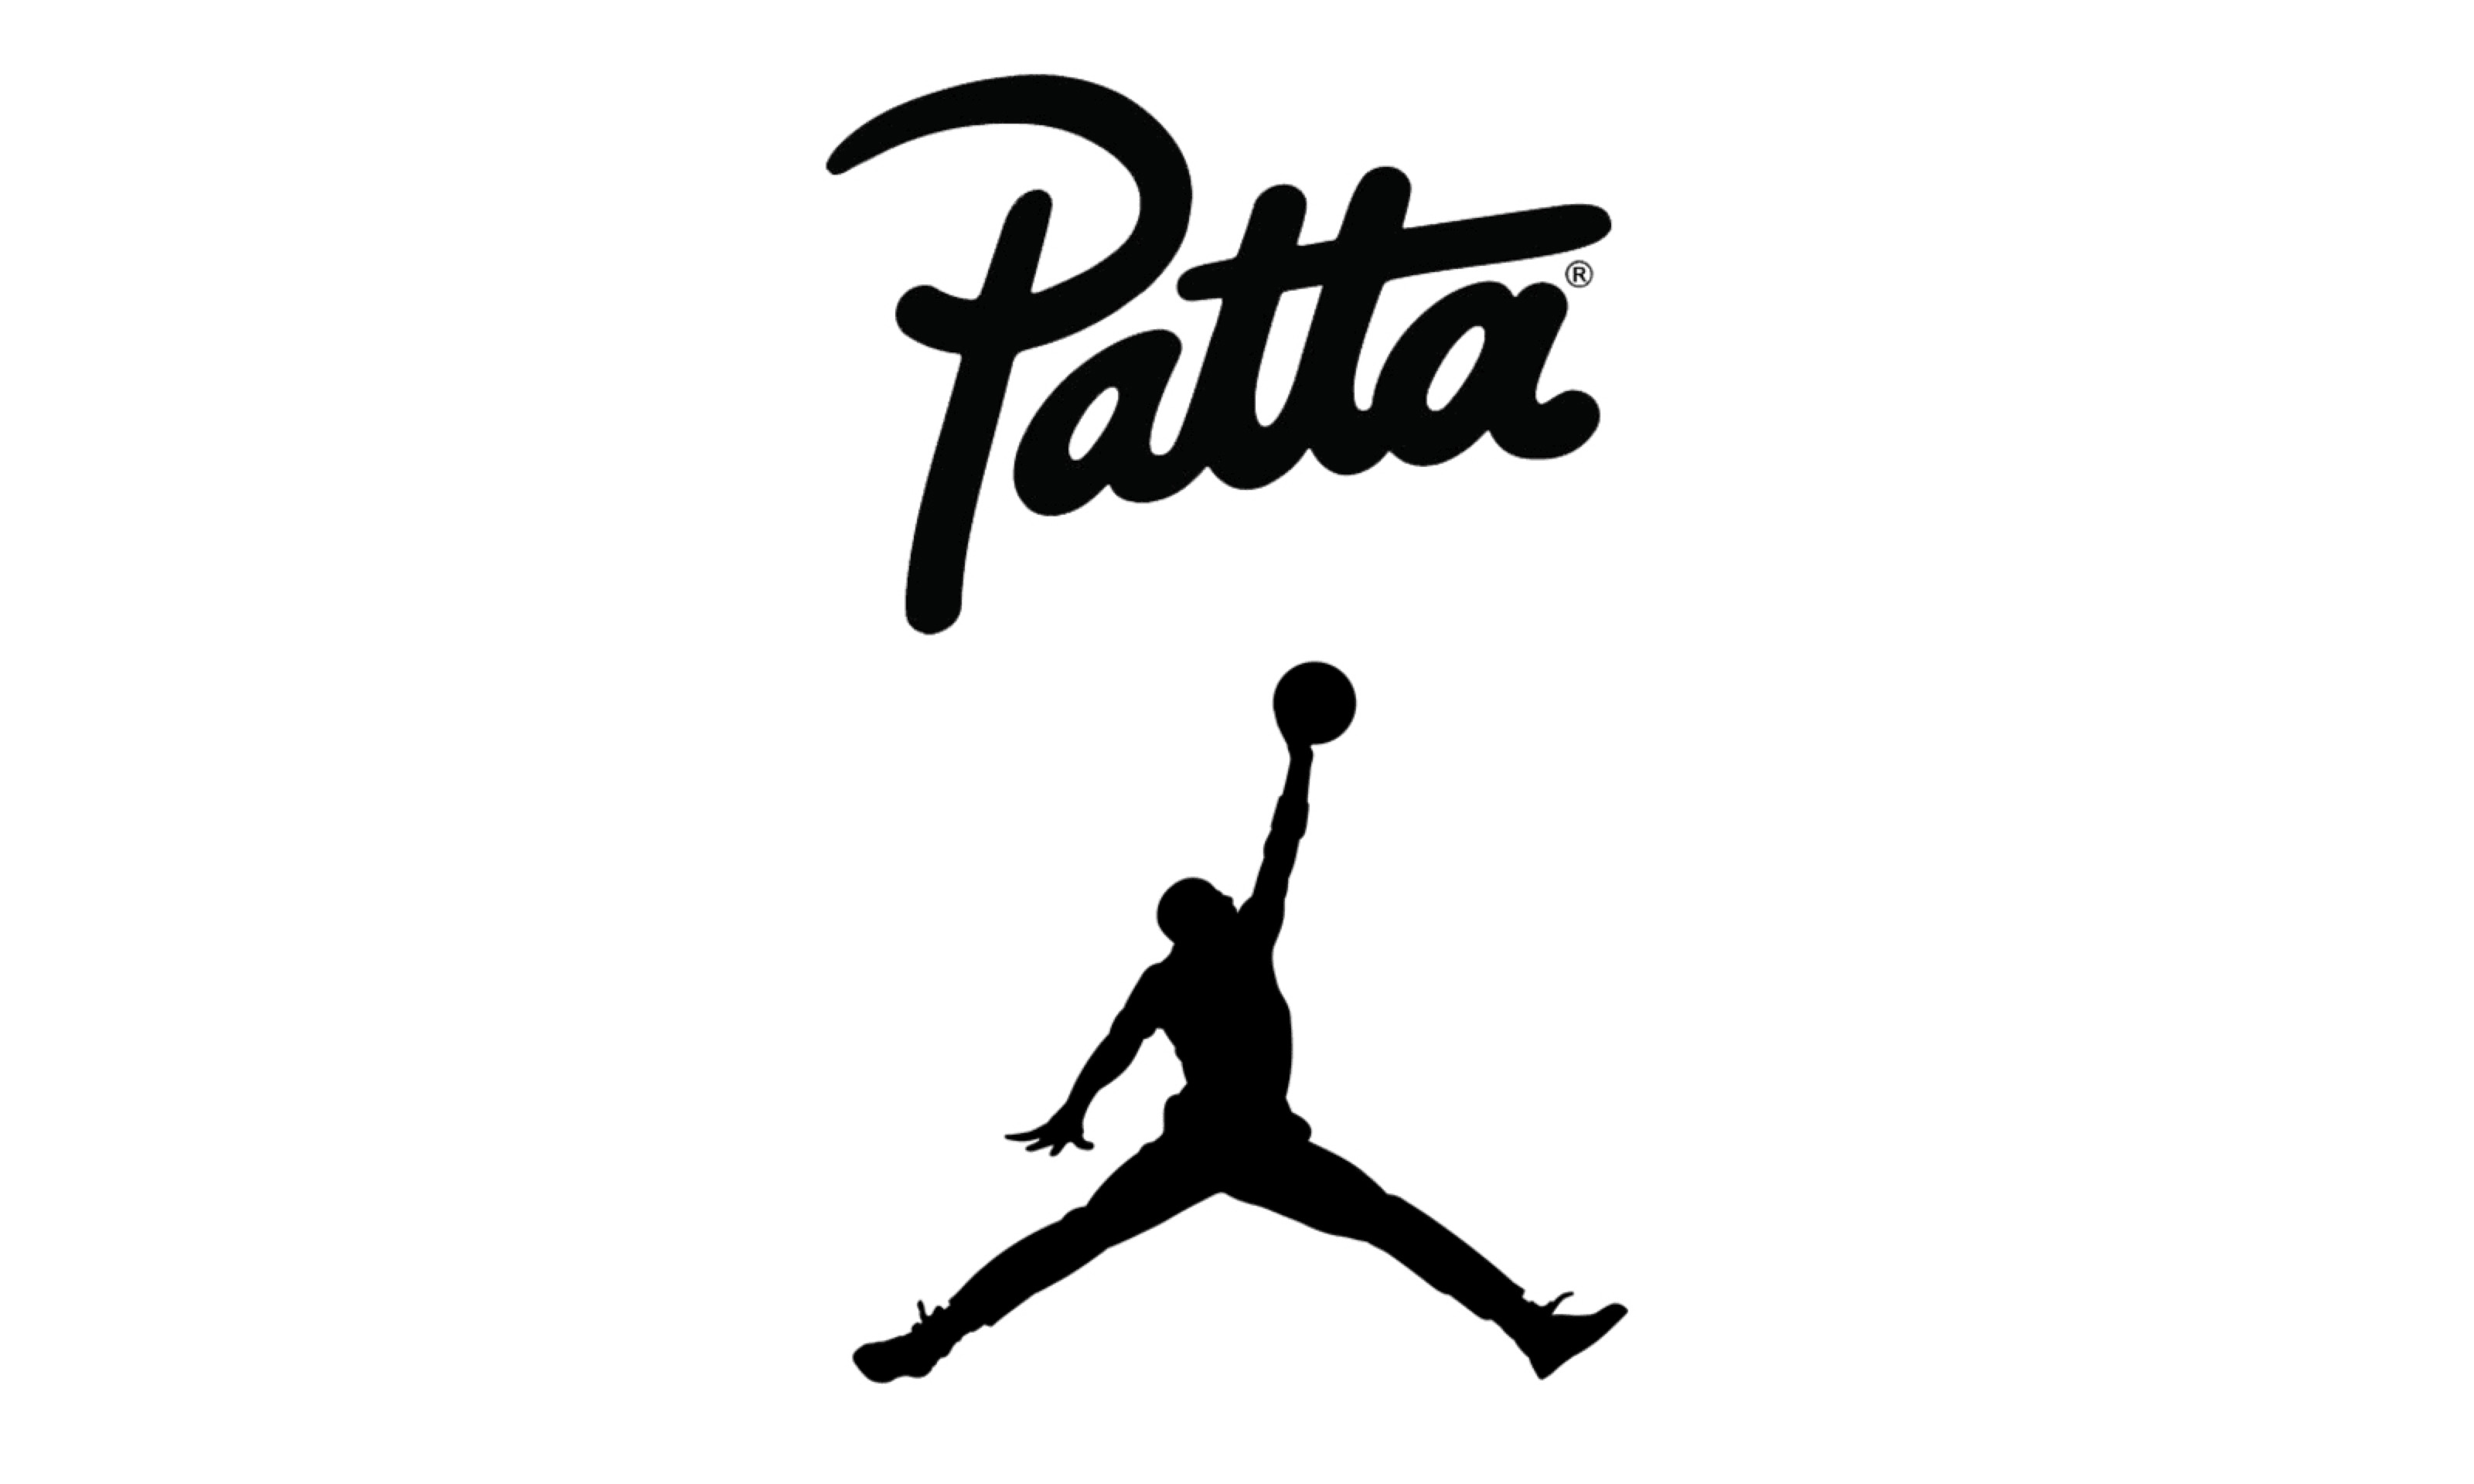 Patta 即将携手 Jordan Brand 带来联名 Air Jordan VII 设计